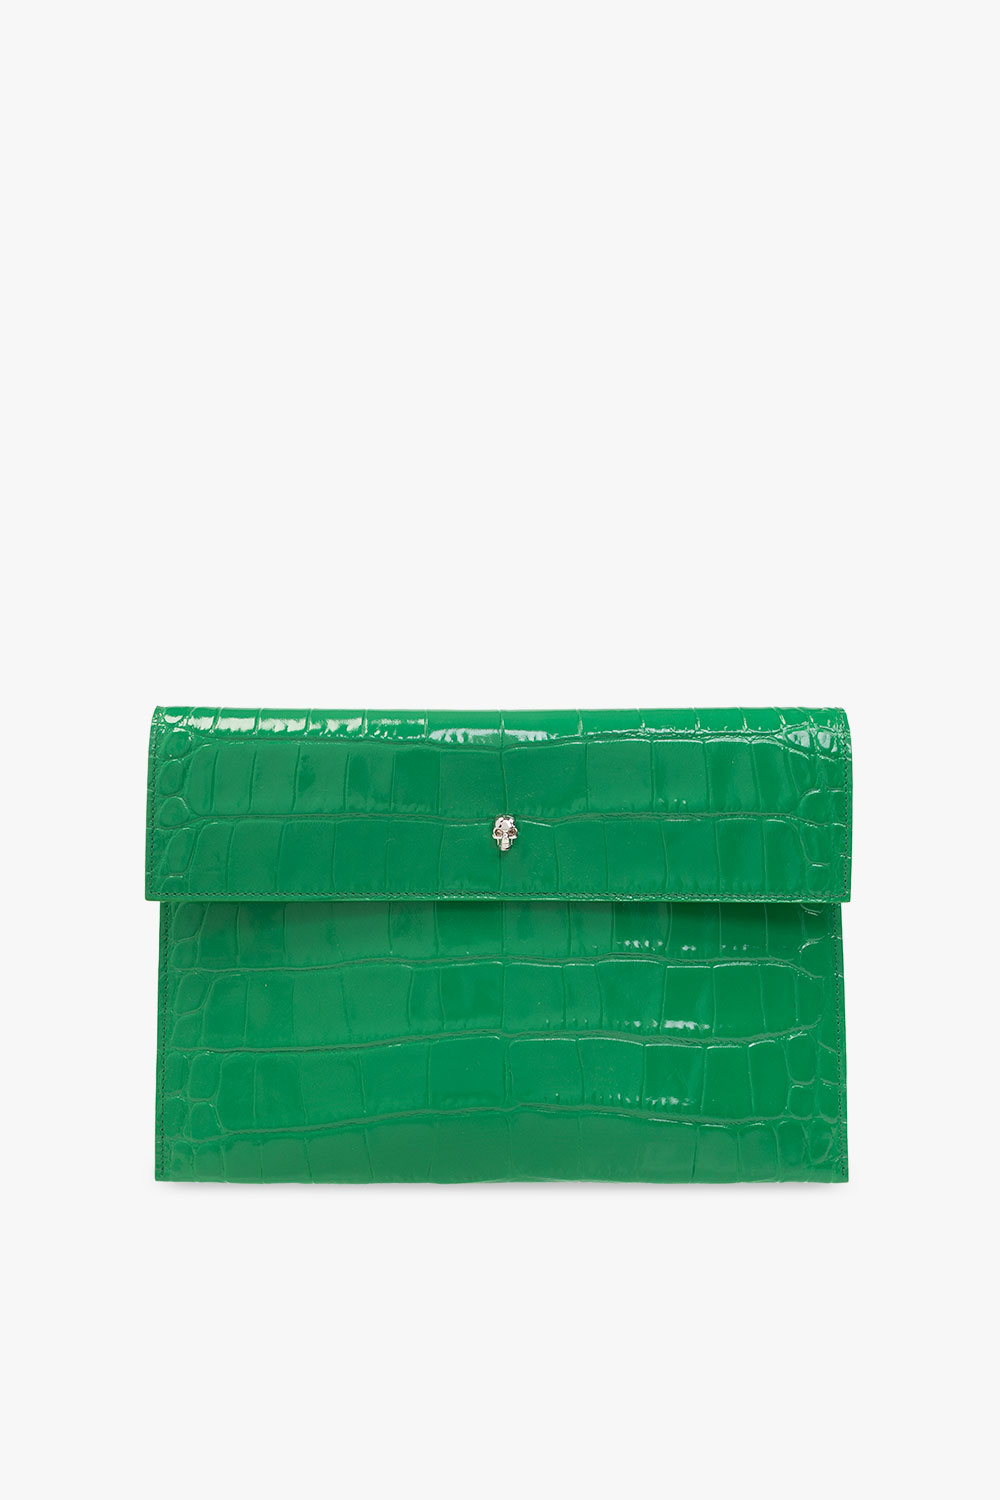 Alexander McQueen ‘Envelope’ leather clutch